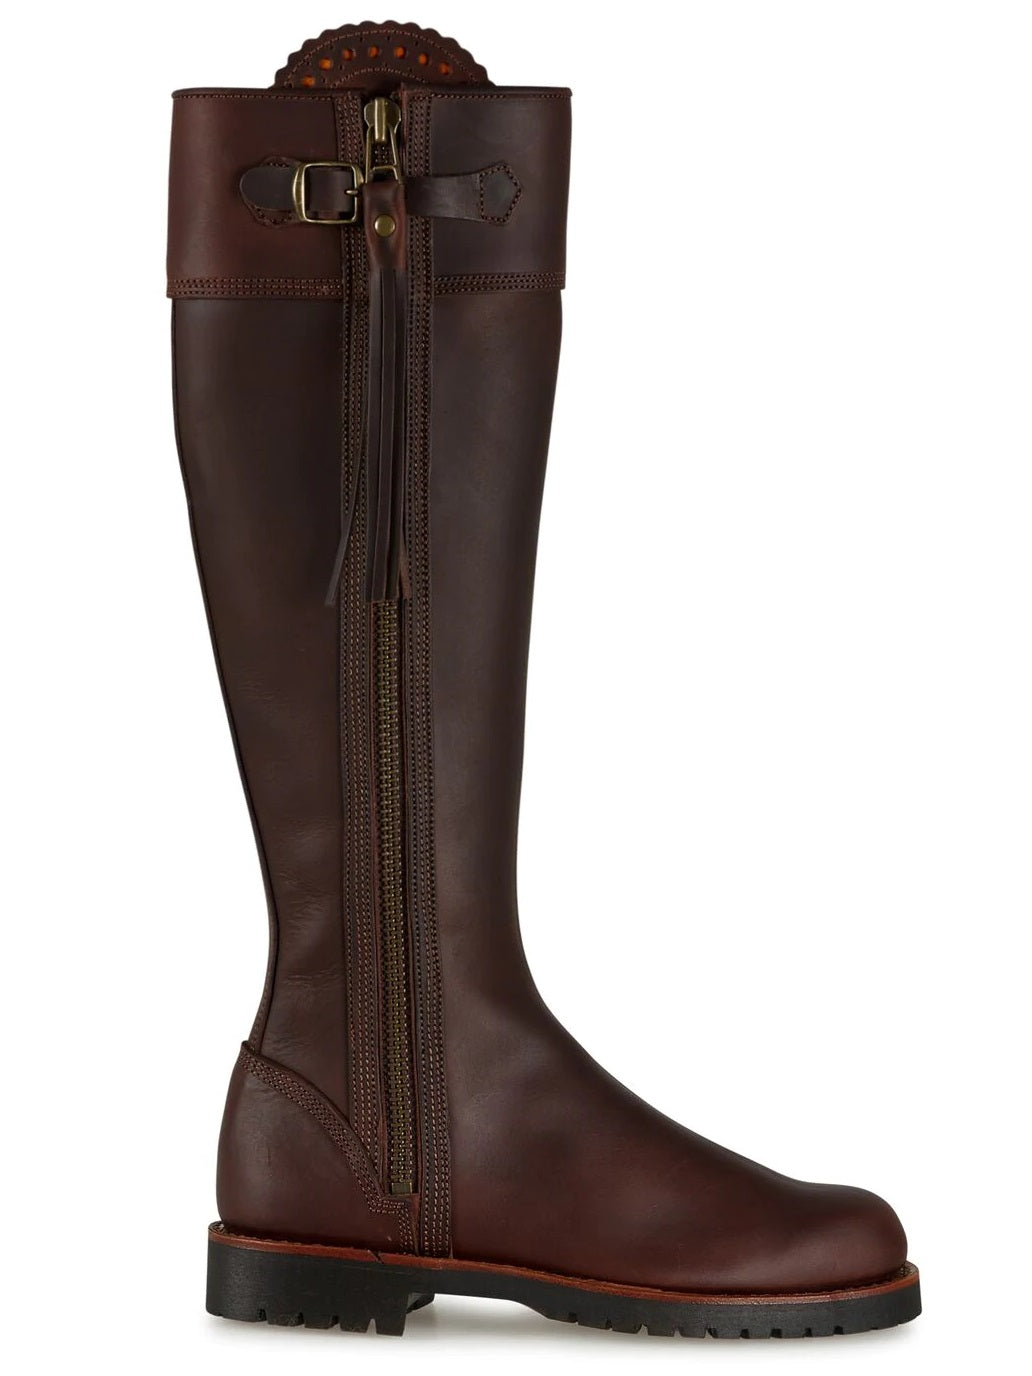 PENELOPE CHILVERS Long Tassel Boots - Leather - Conker